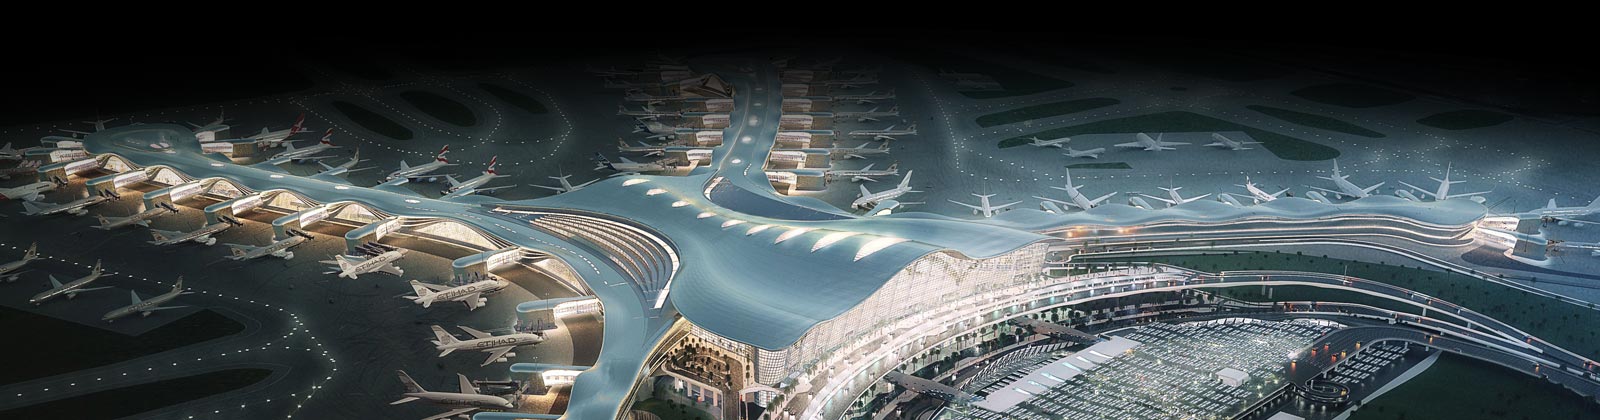 Abu Dhabi Terminal View